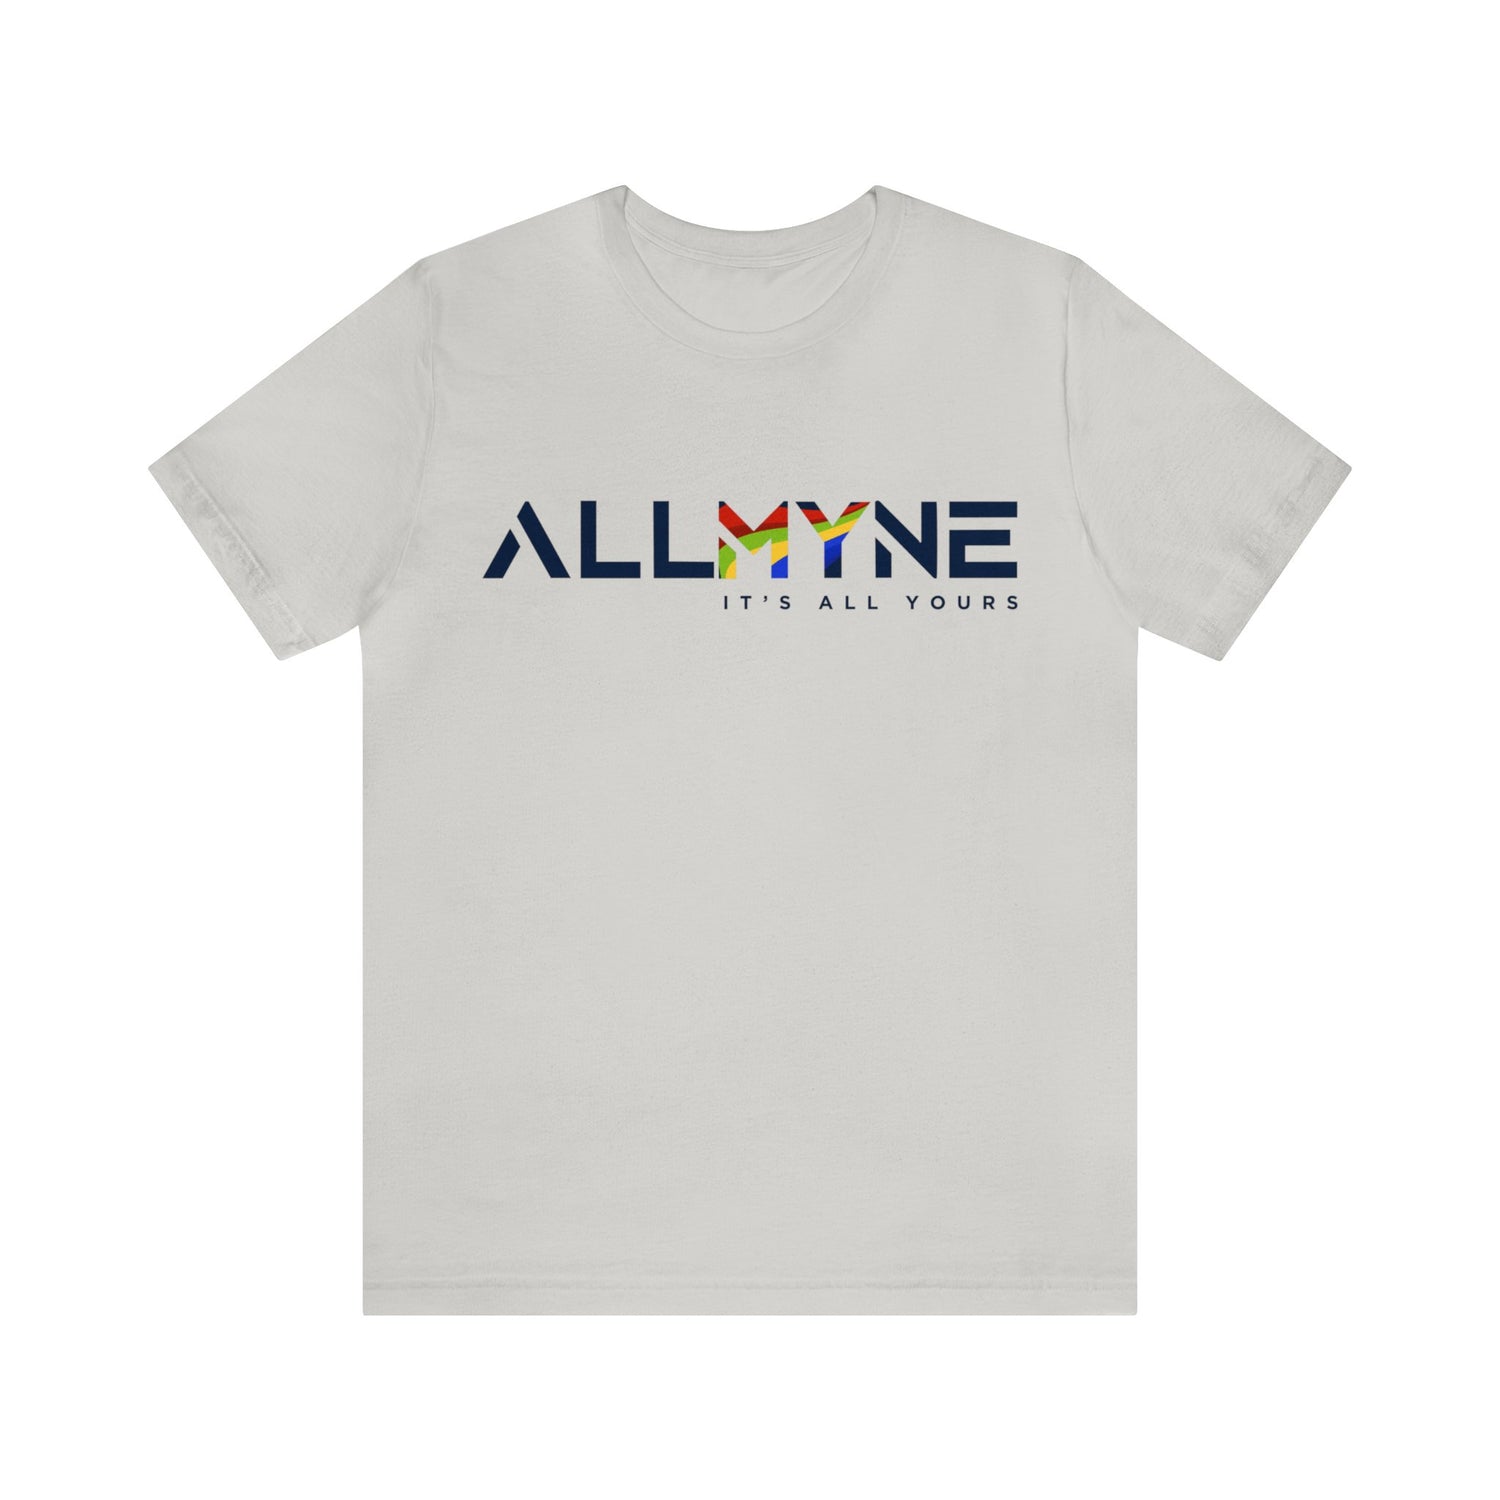 ALLMYNE Classic Logo Tee